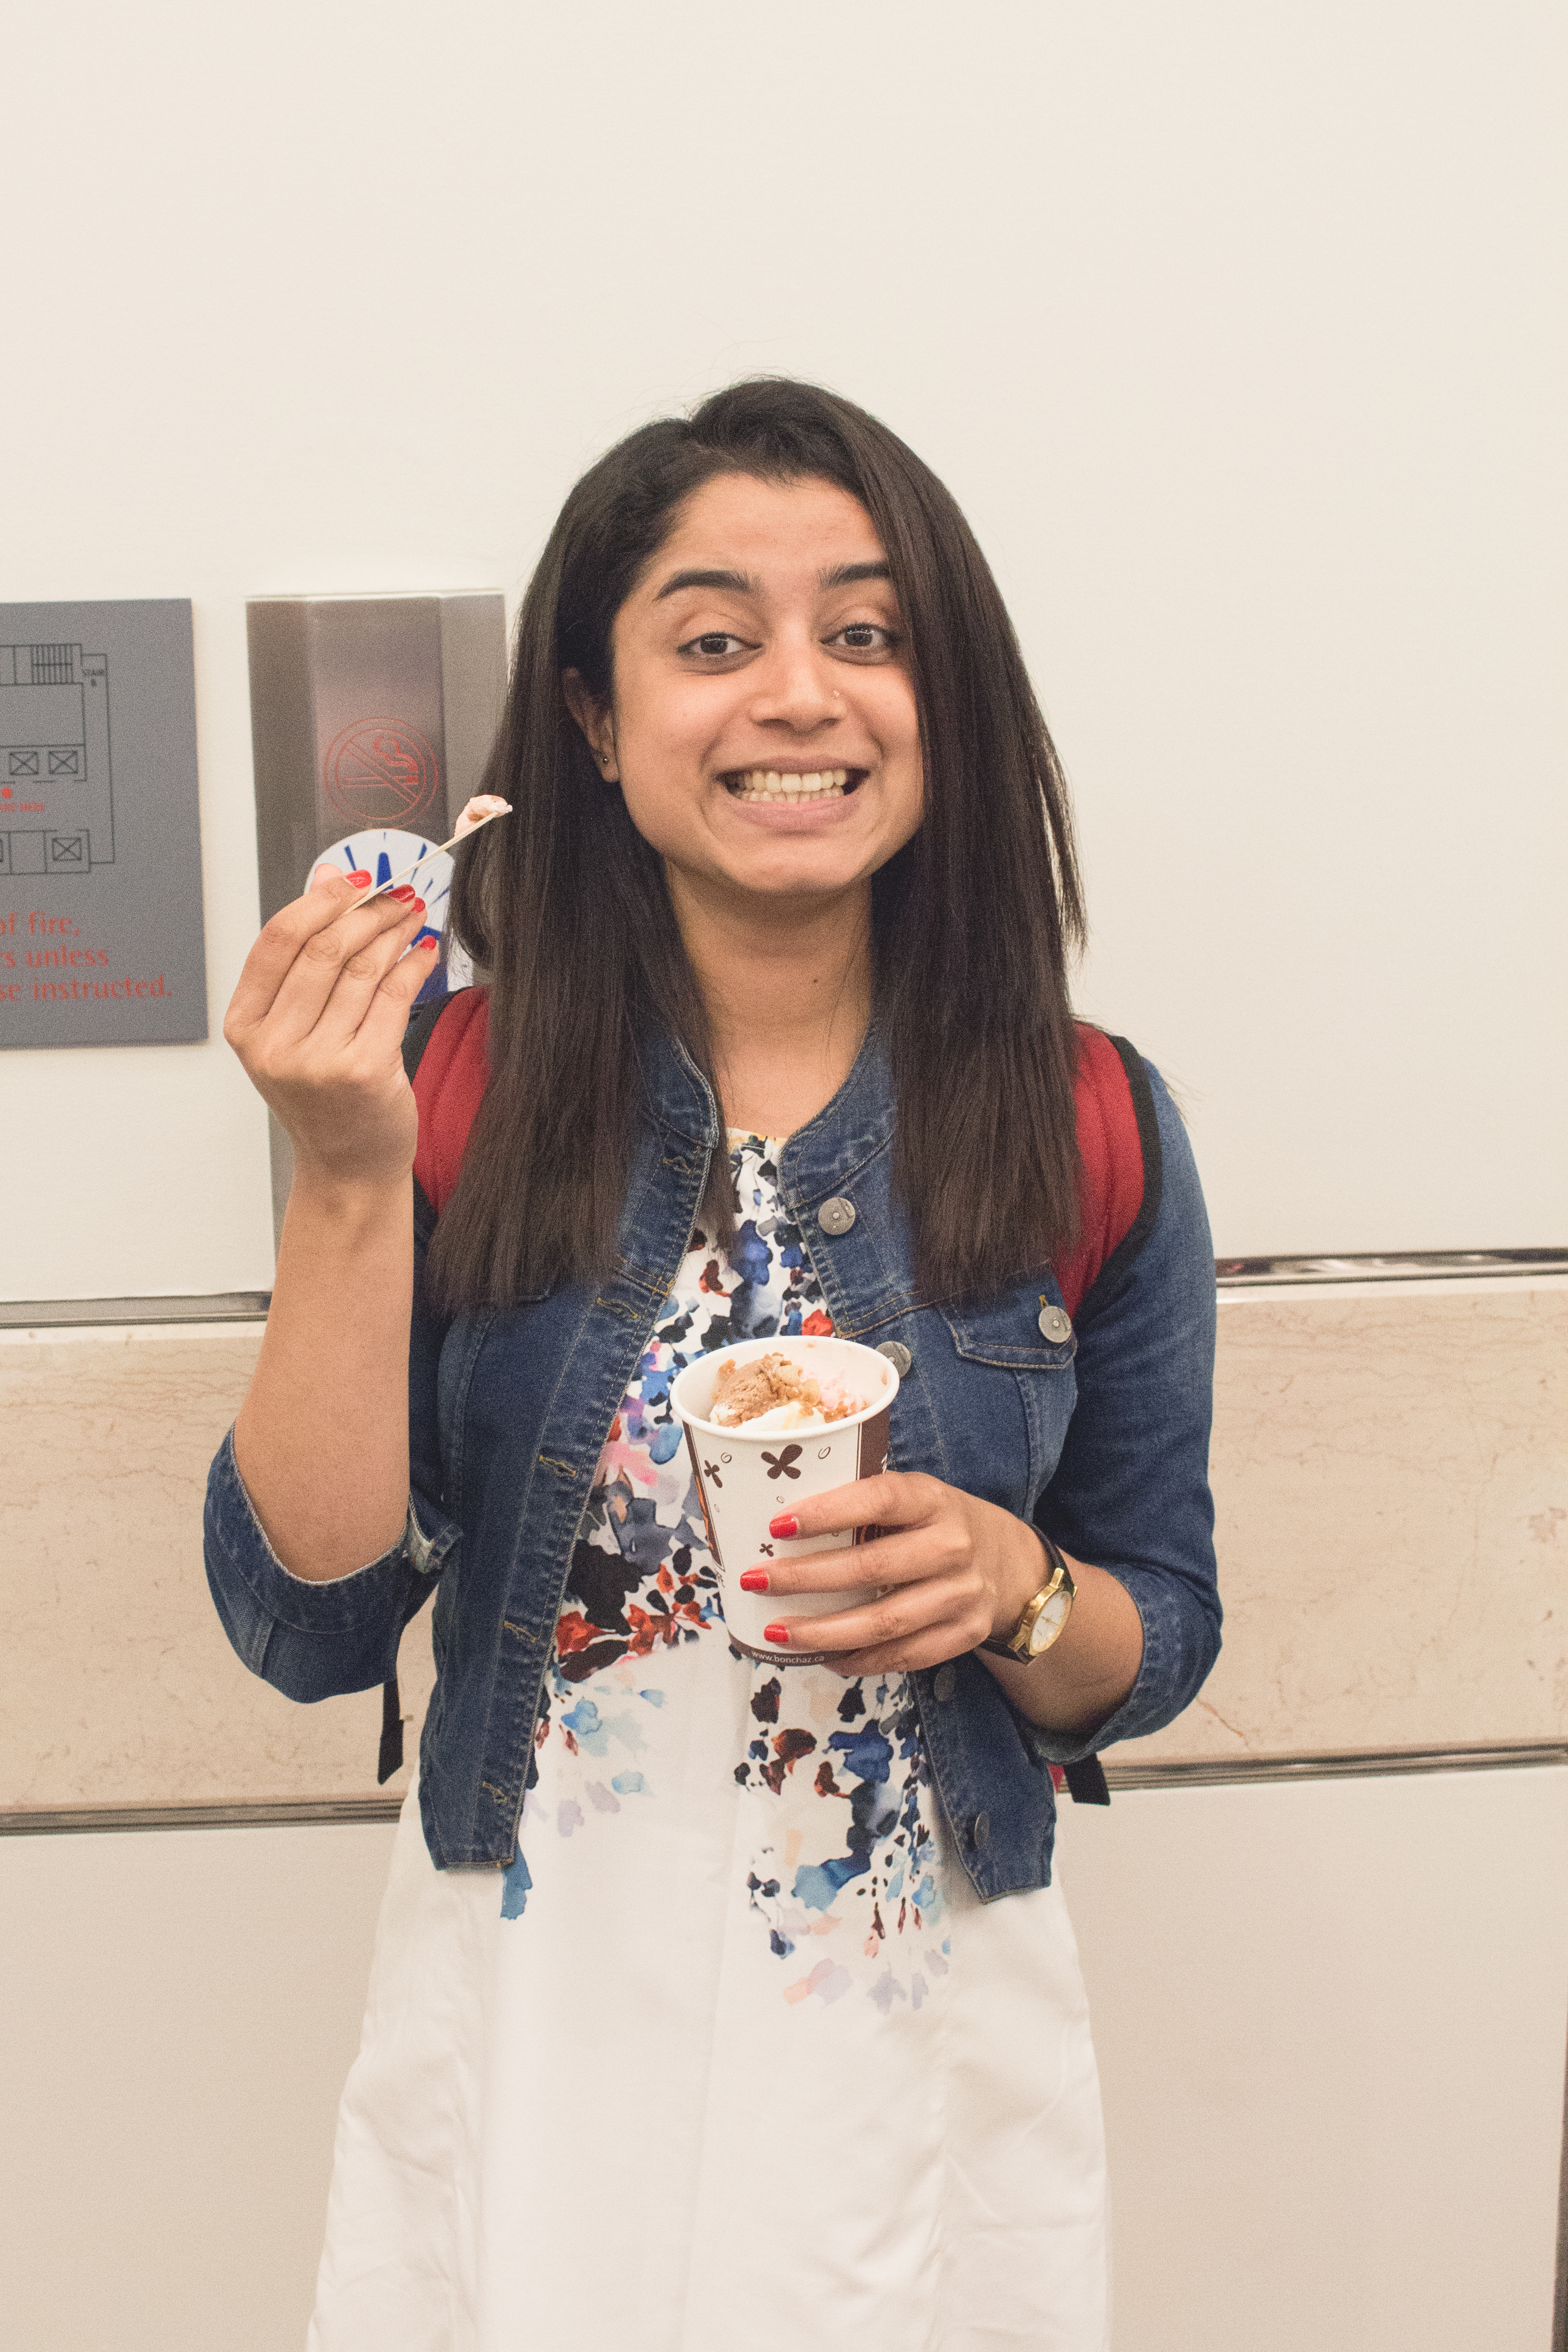 A happy student enjoying their ice cream